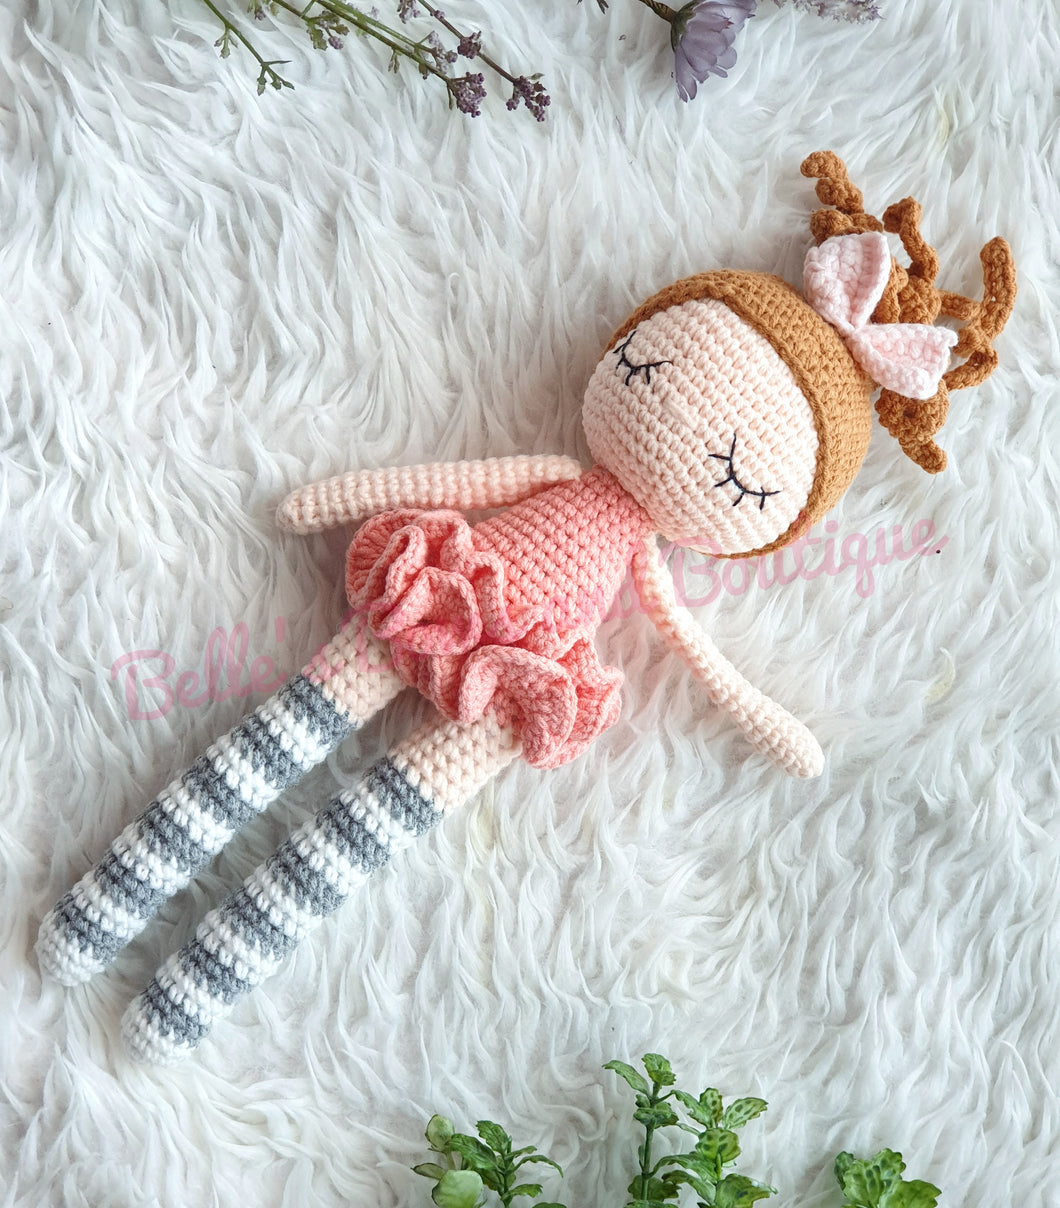 Handmade Crochet Amigurumi Stuff Toy